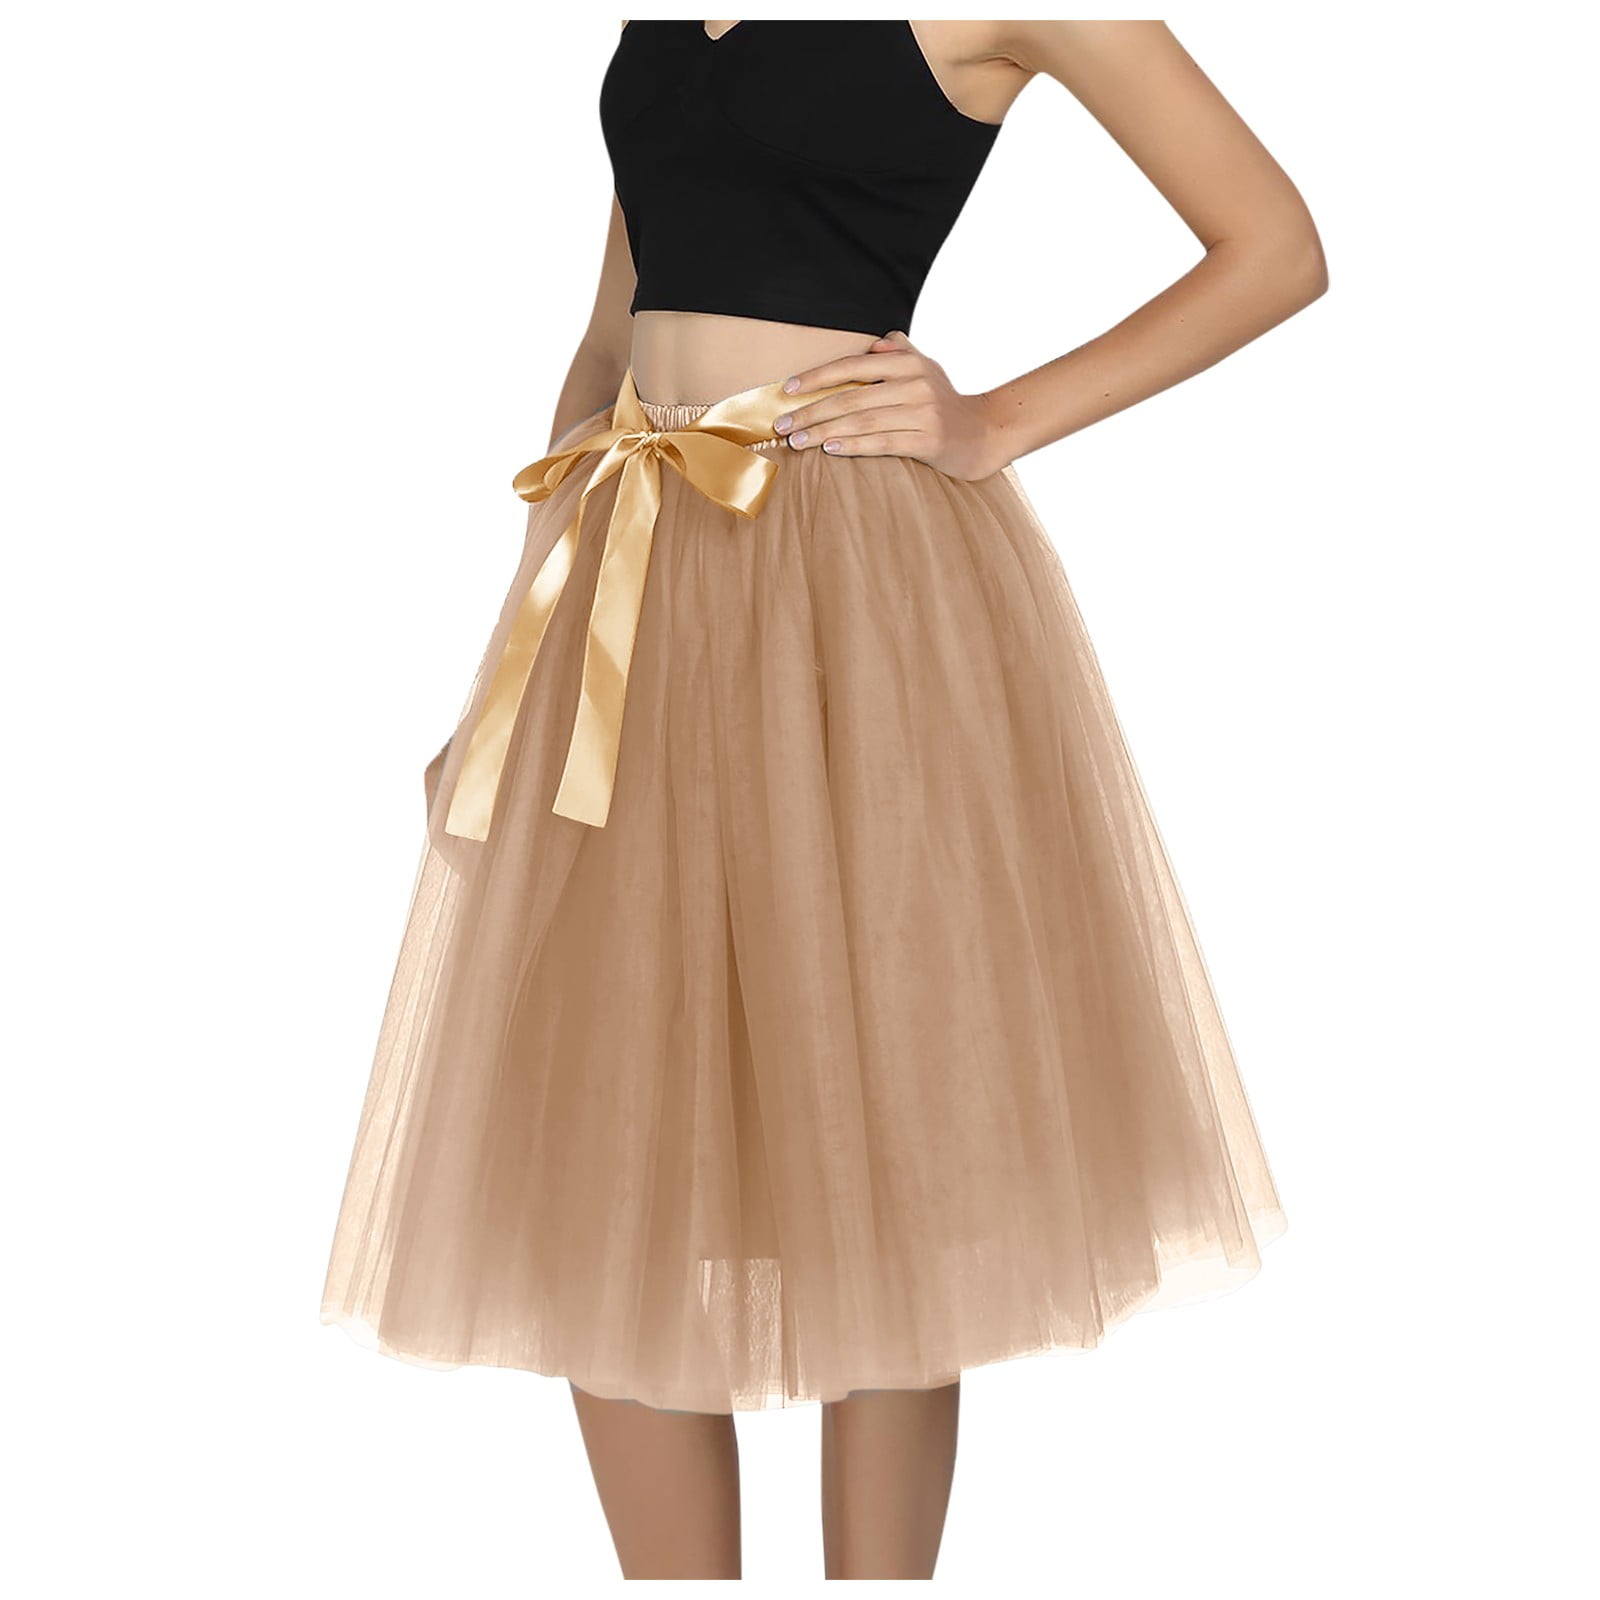 HAXMNOU Women's A Line Short Knee Length Tutu Tulle Prom Party Skirt Khaki  One Size - Walmart.com